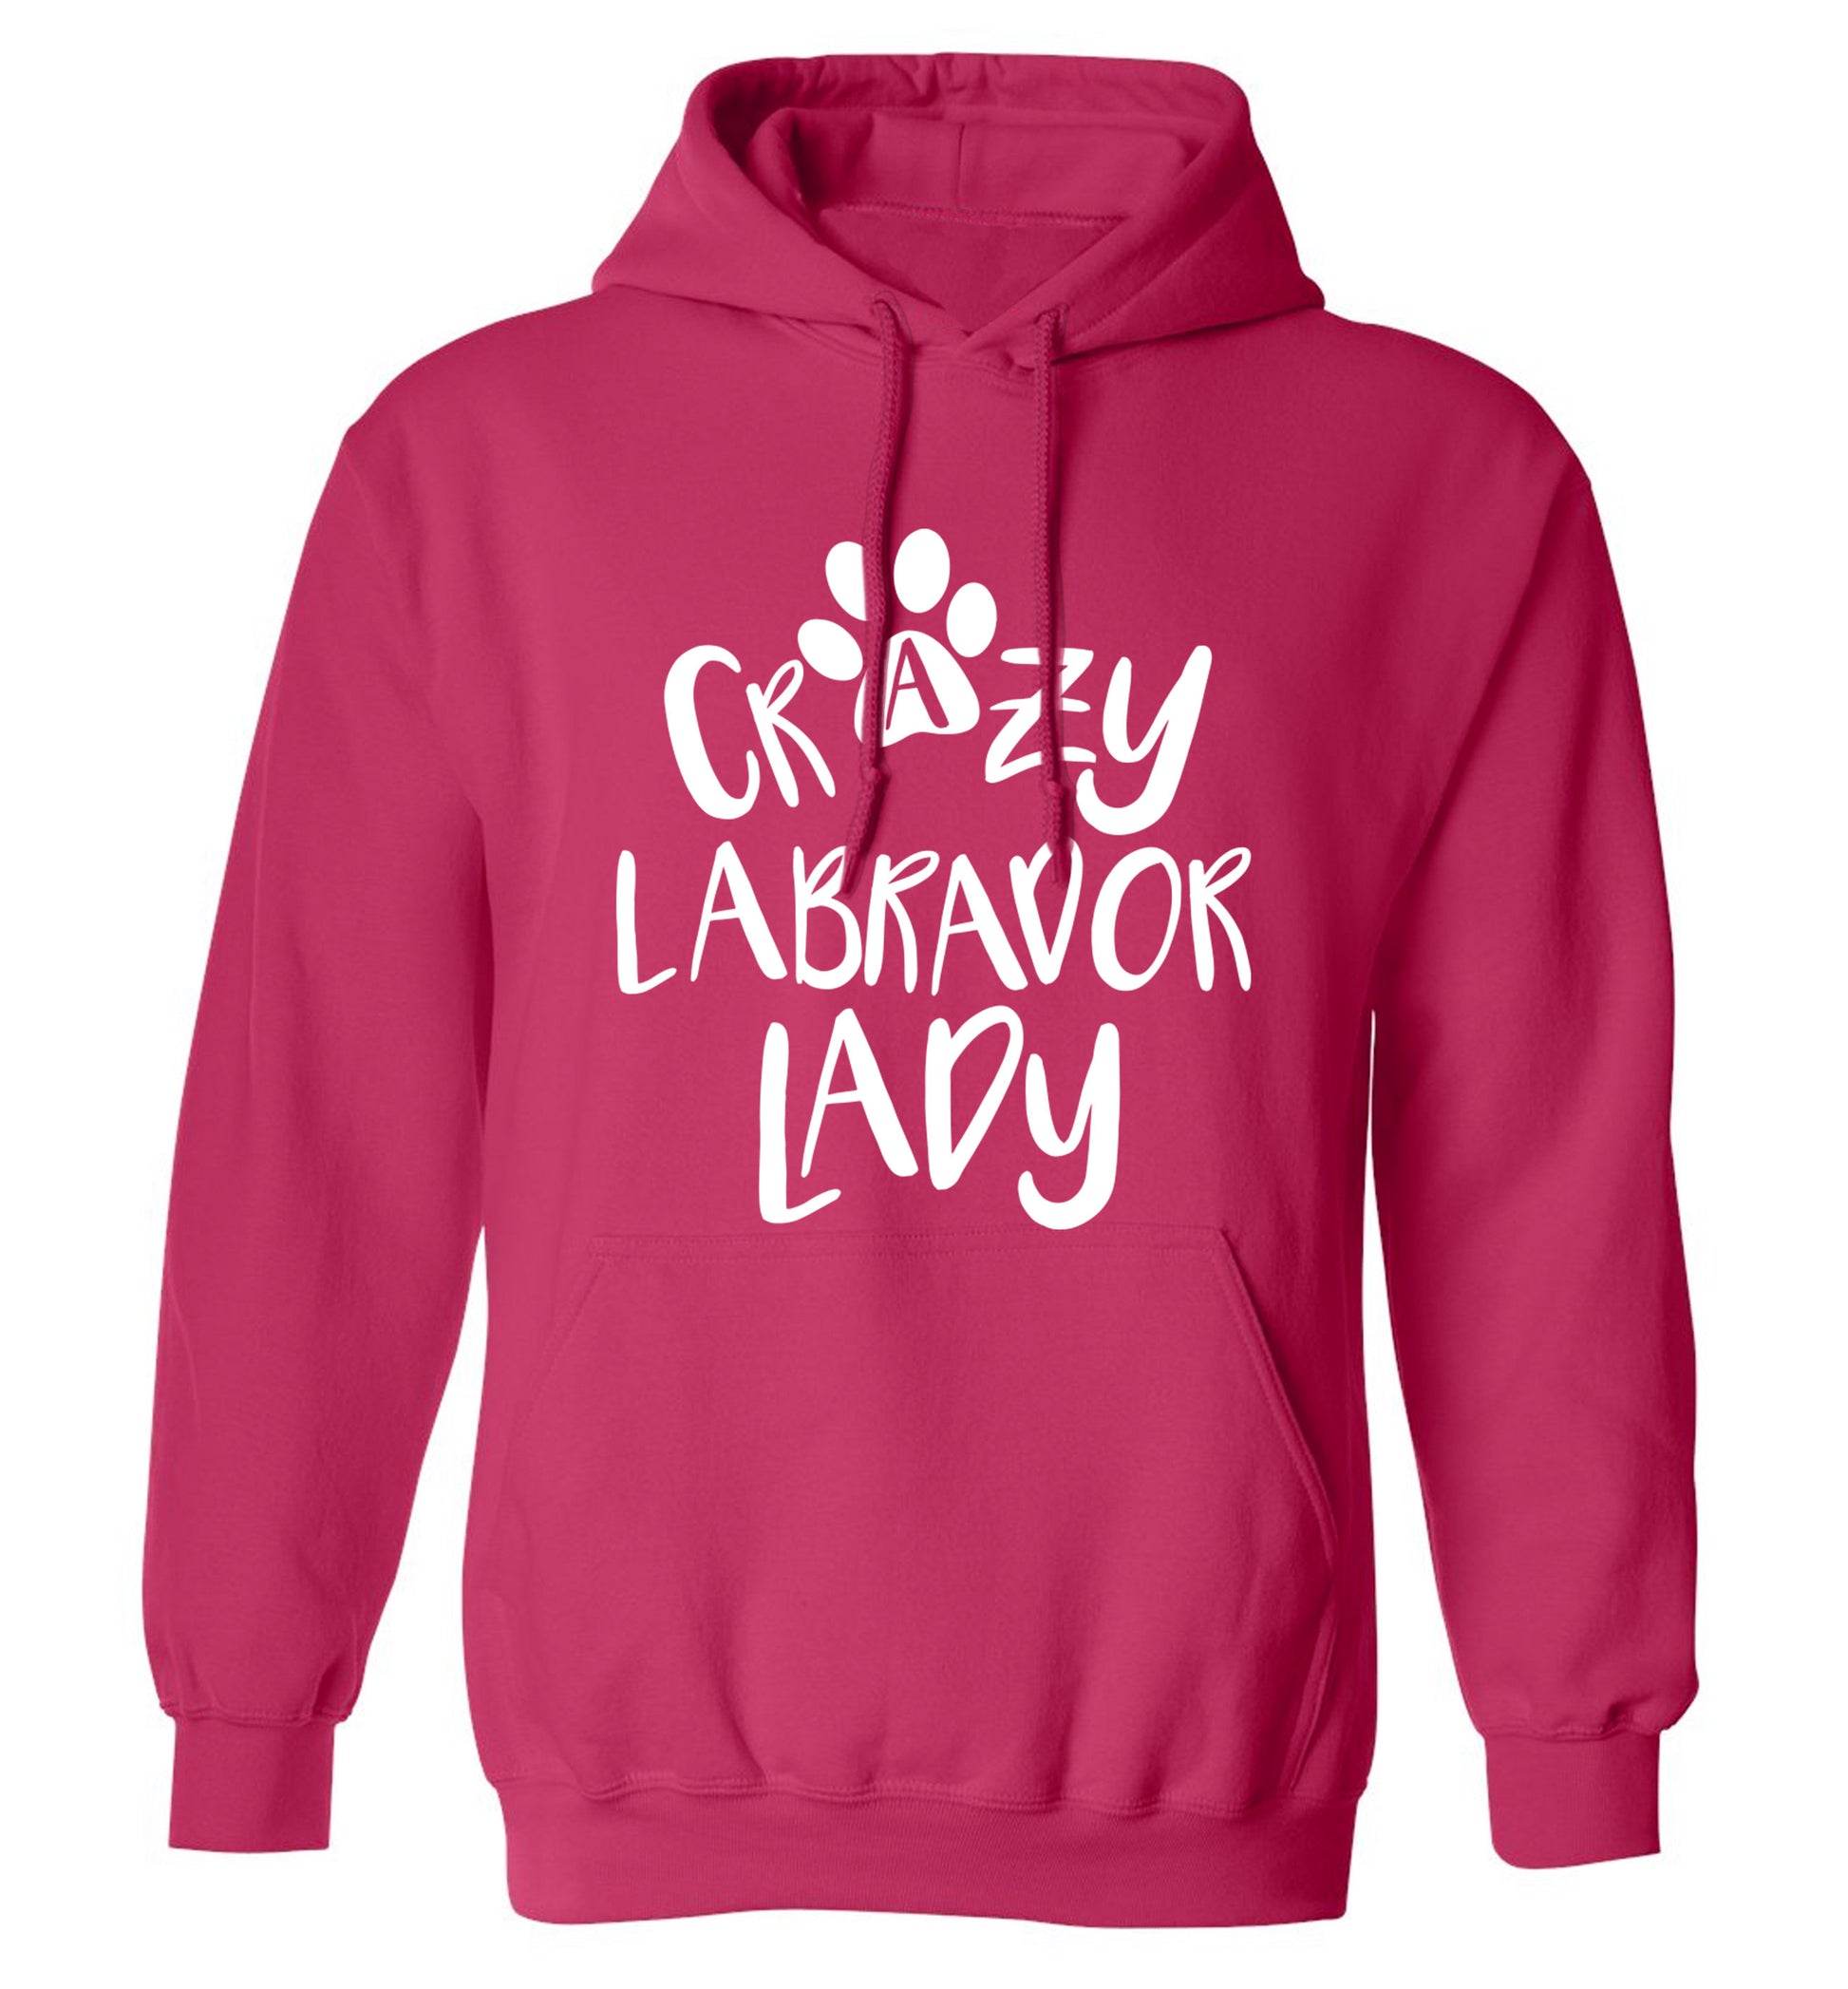 Crazy labrador lady adults unisex pink hoodie 2XL